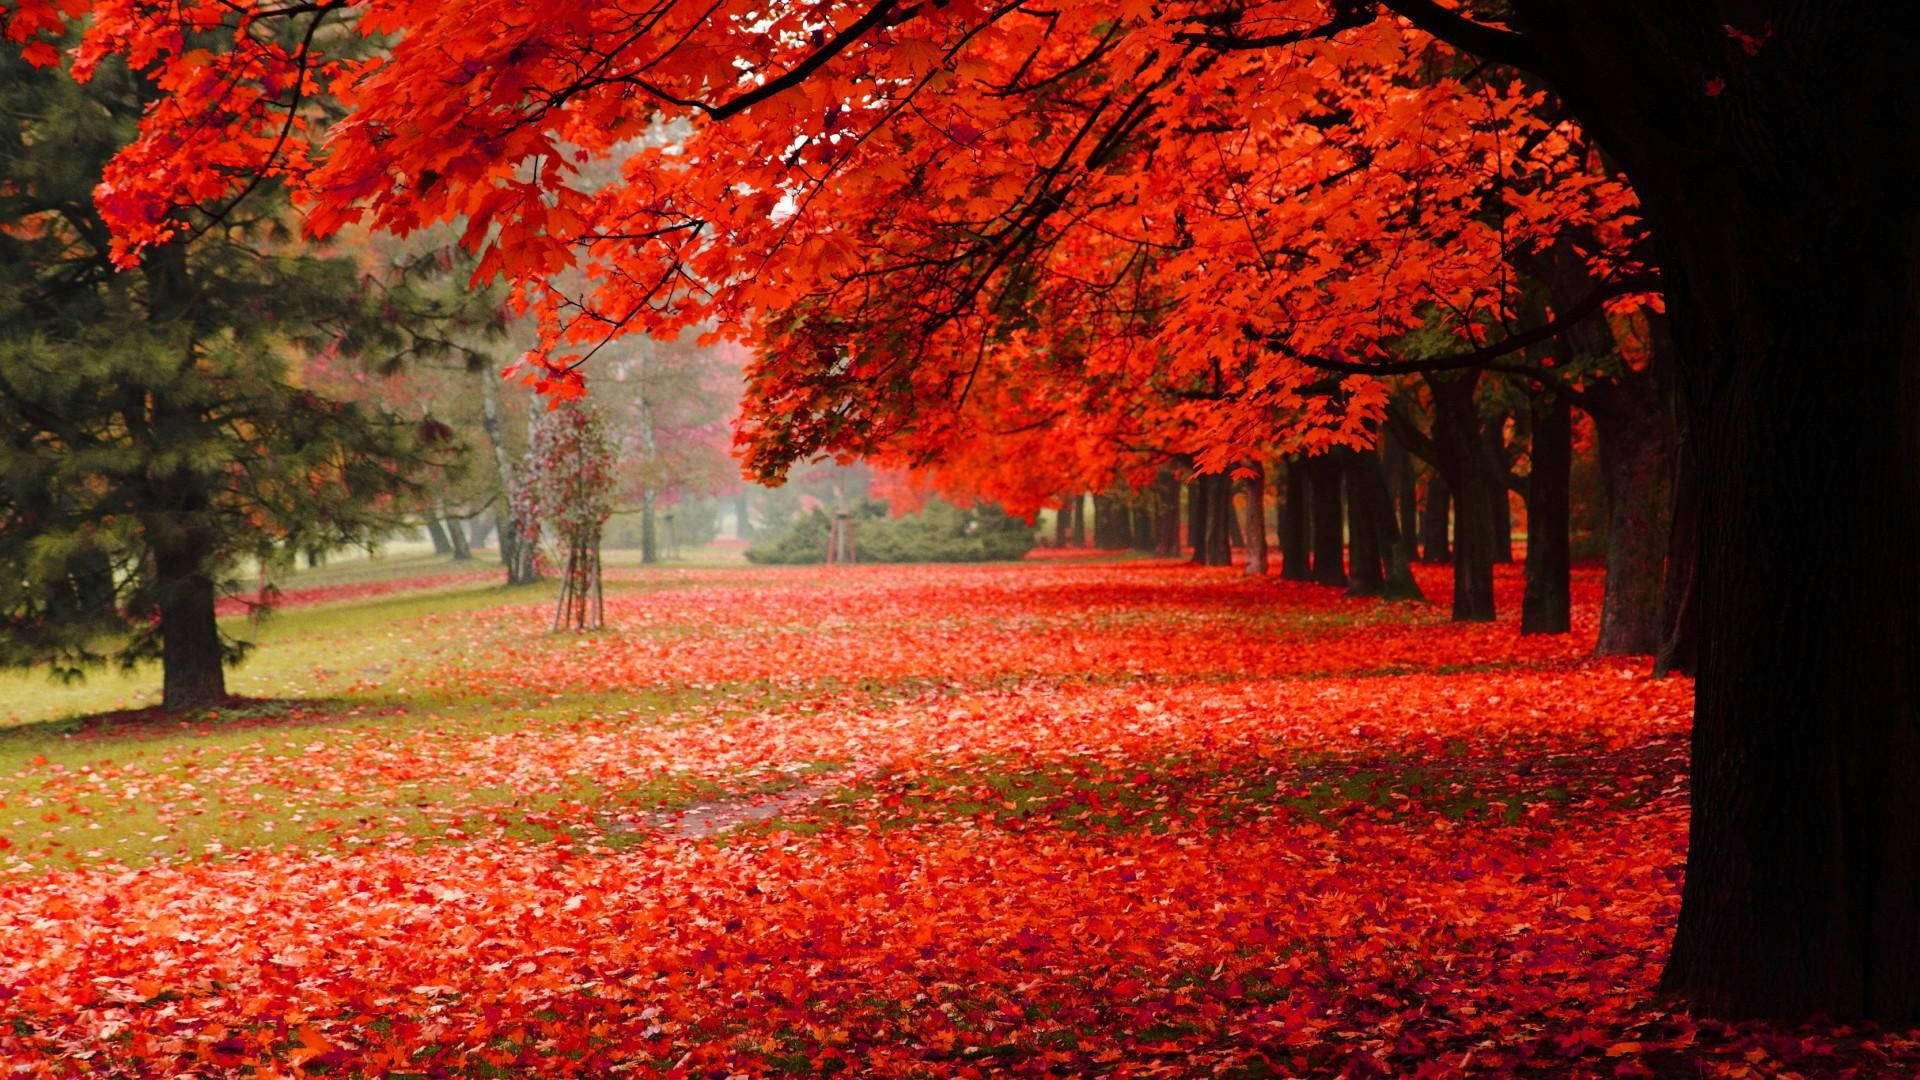 Beautiful Autumn Desktop Backgrounds | ManyBackgrounds.com